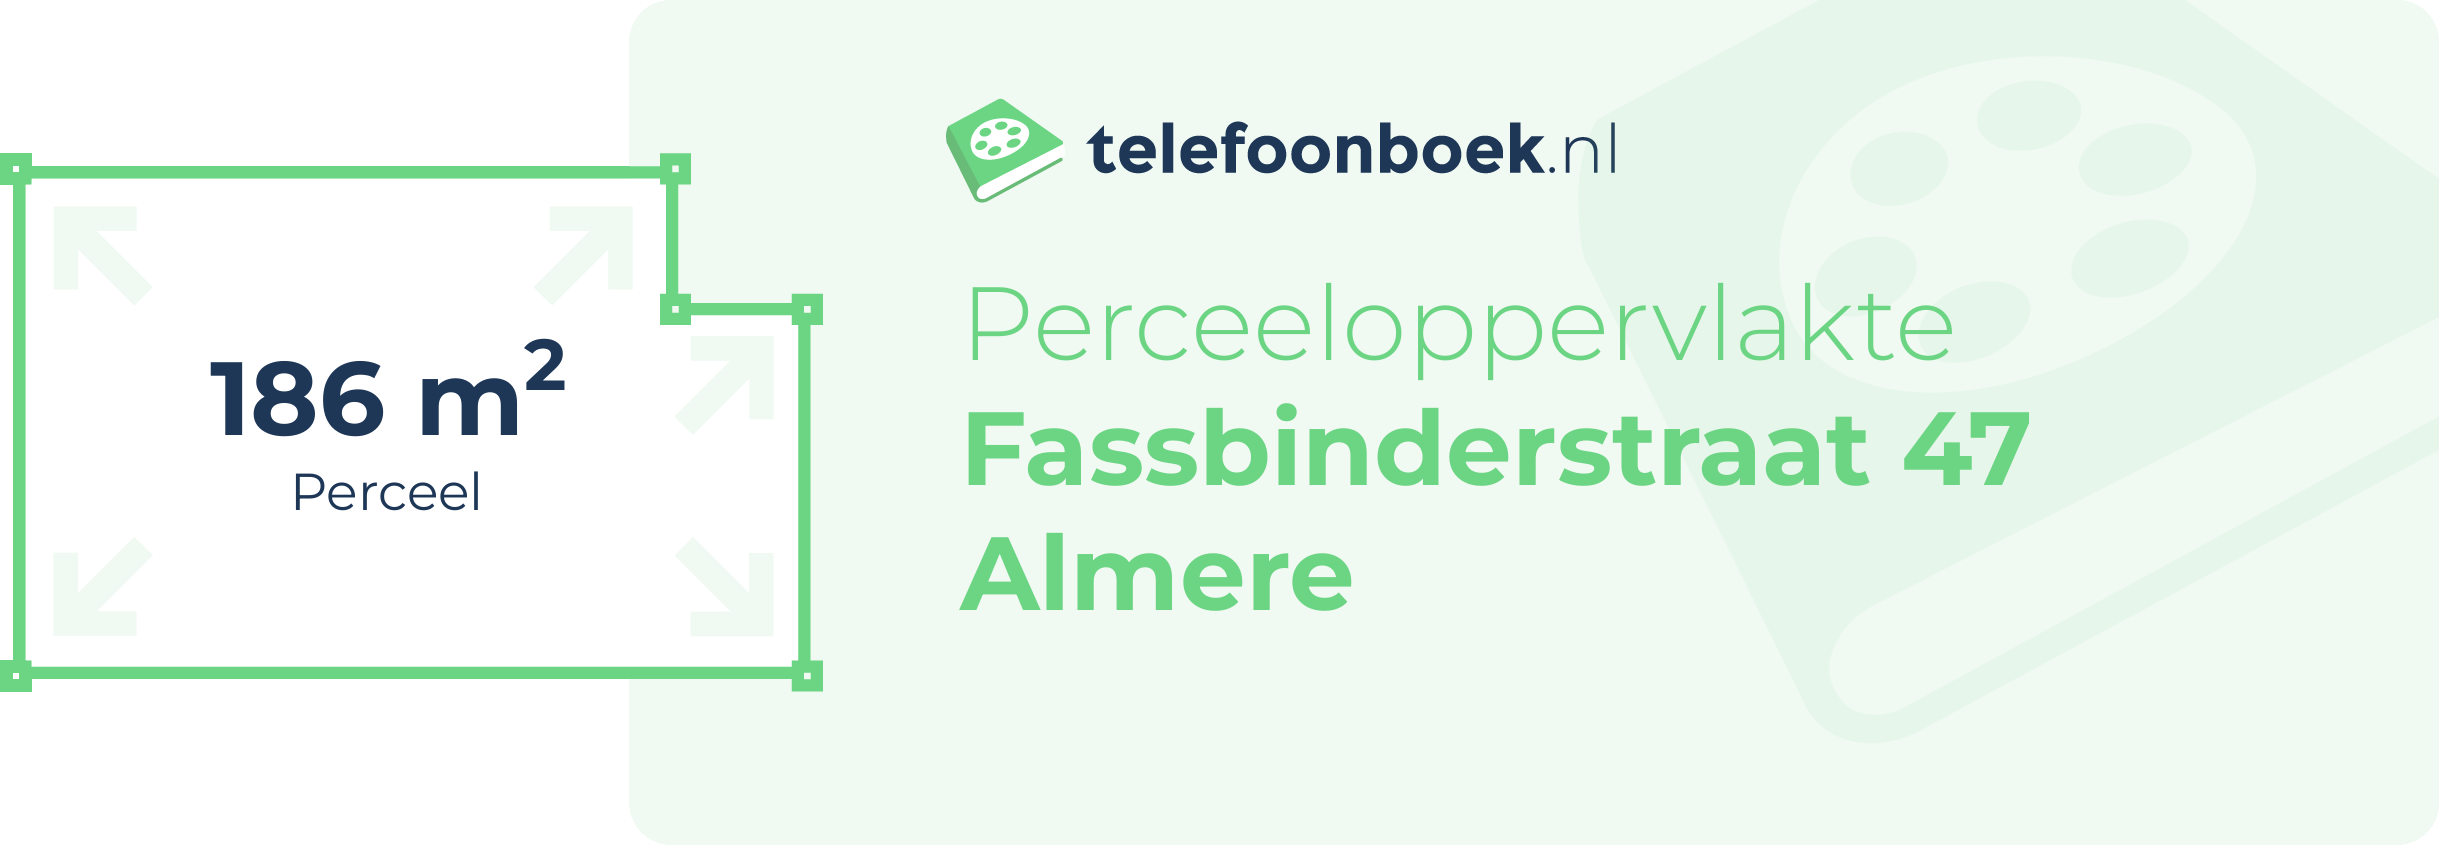 Perceeloppervlakte Fassbinderstraat 47 Almere